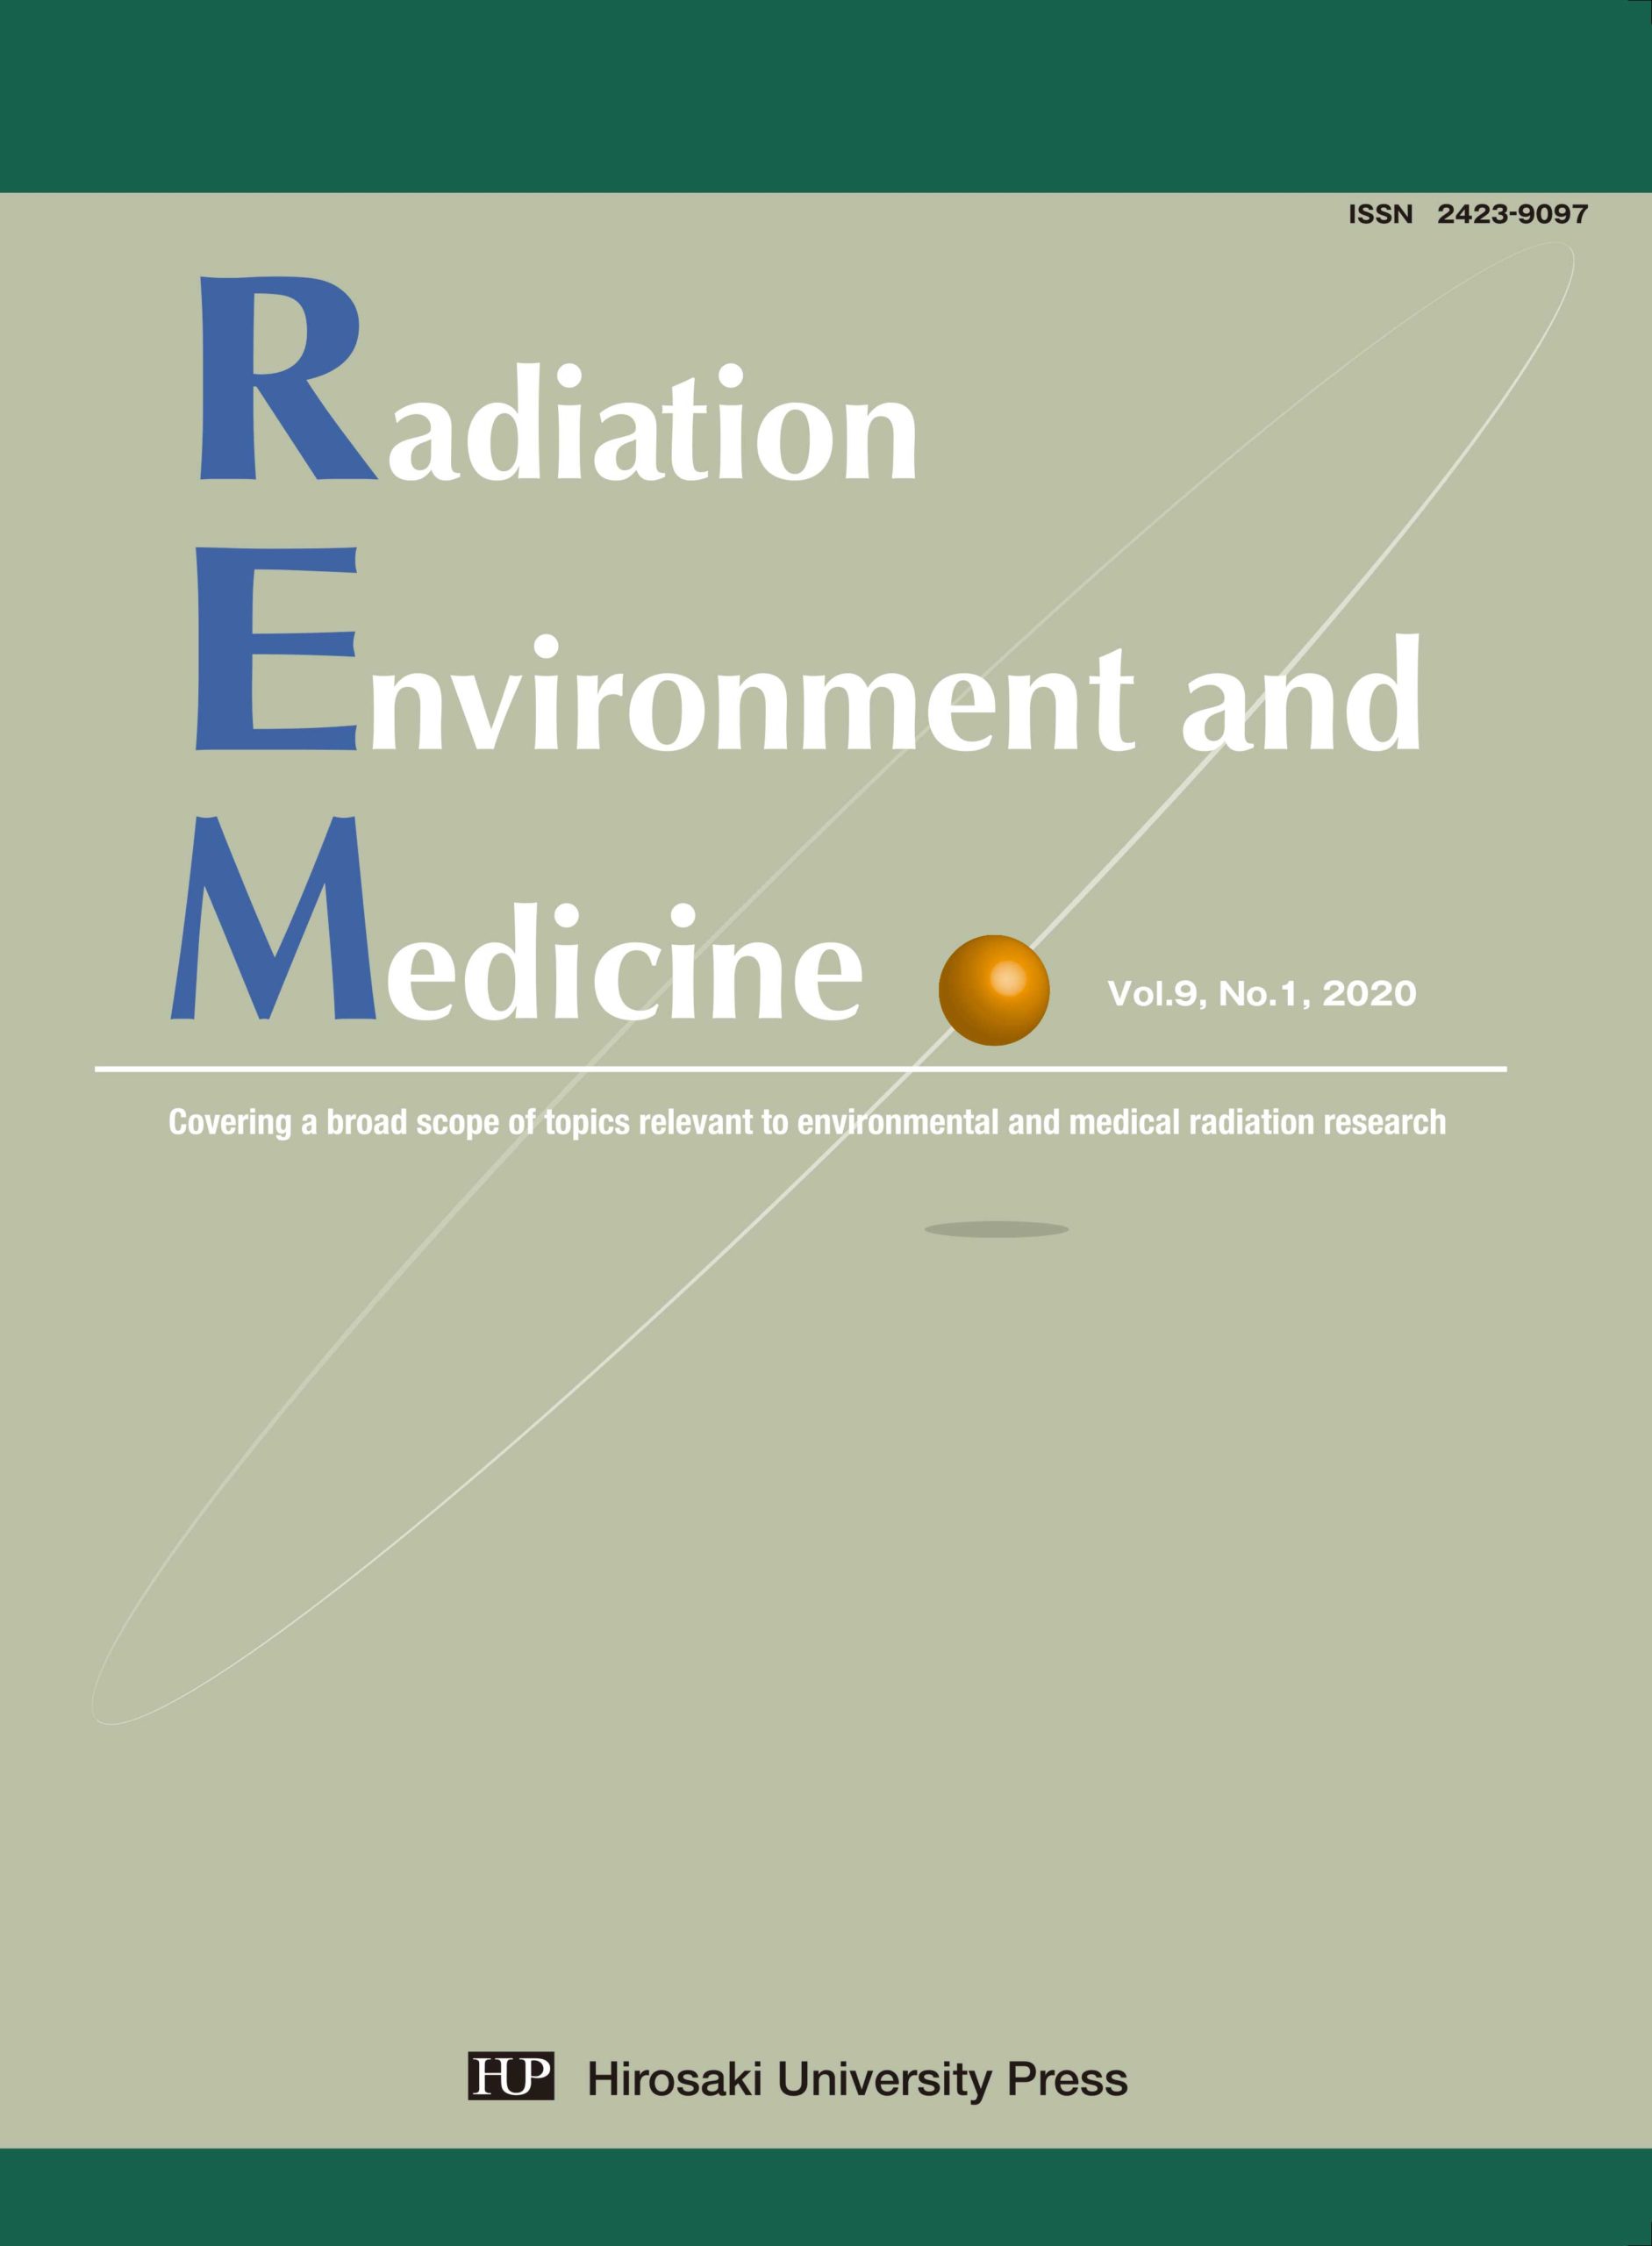 Radiation Environment and Medicine Vol.9, No.1 cover